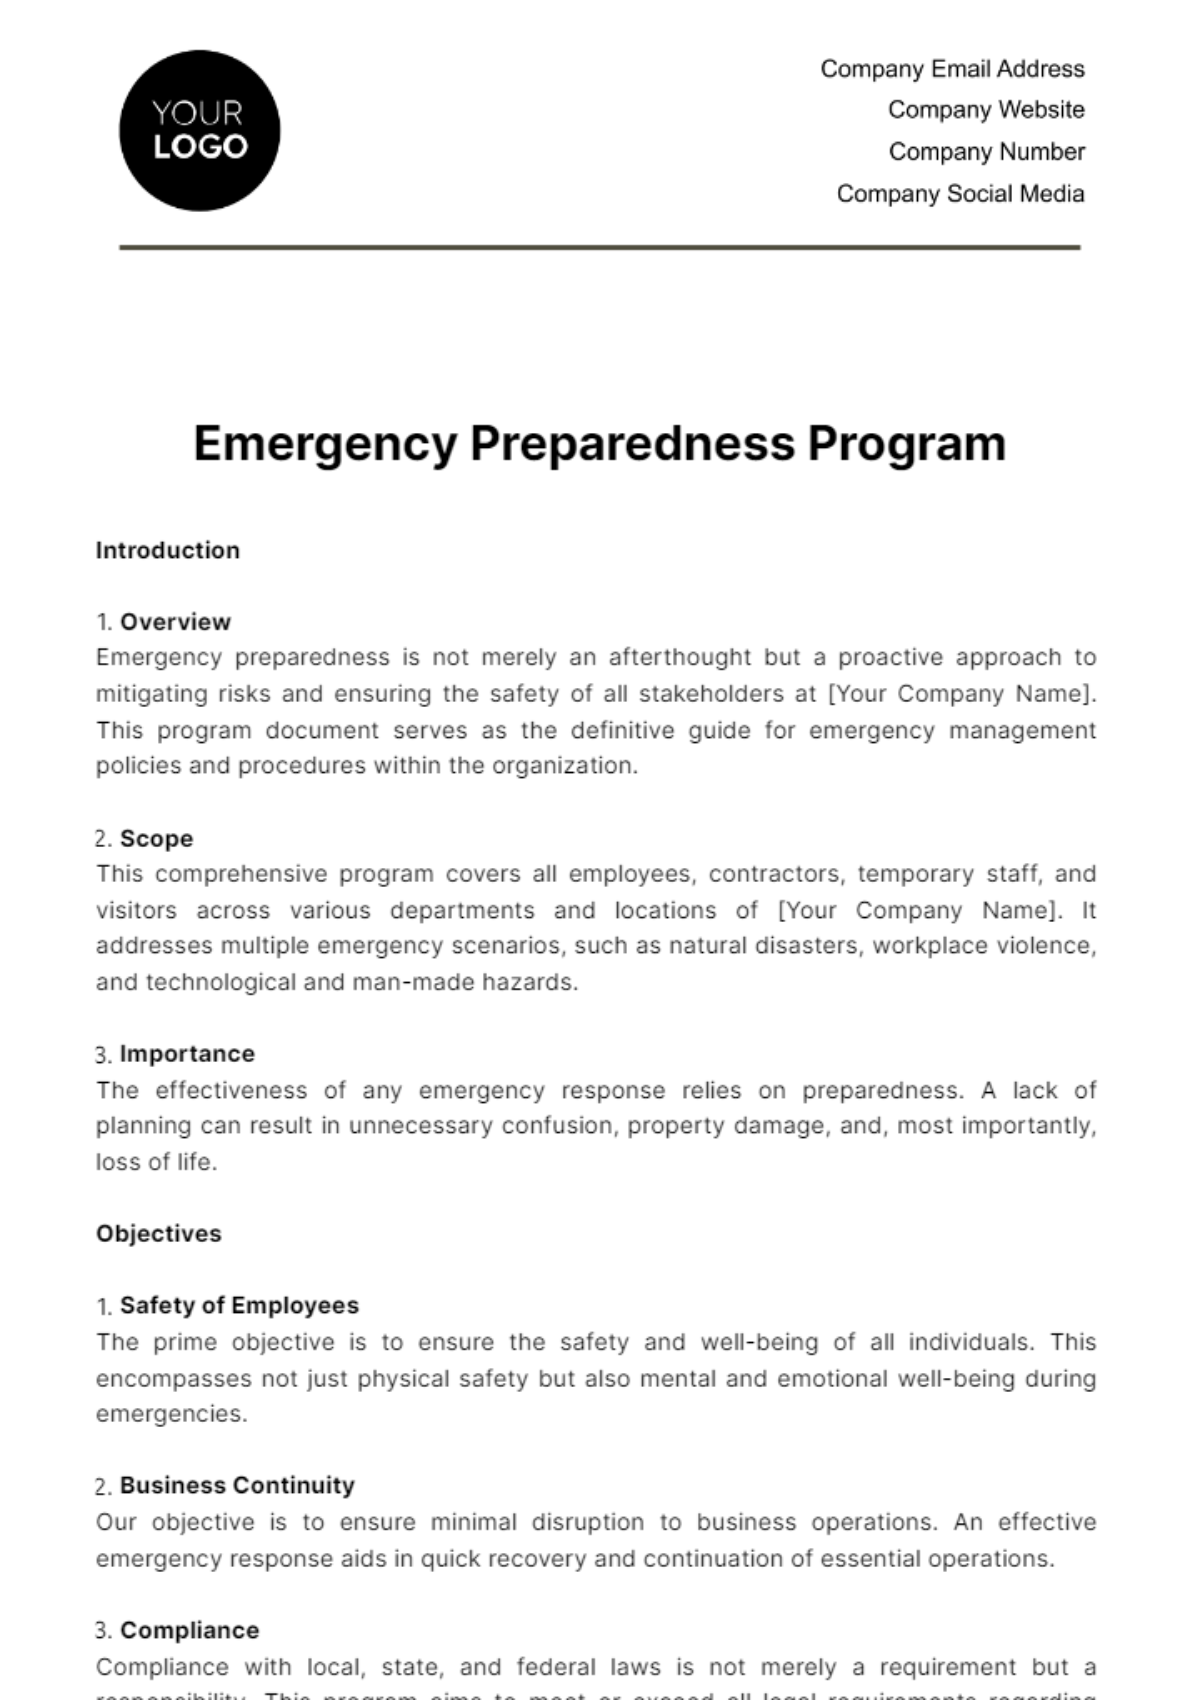 Emergency Preparedness Program HR Template